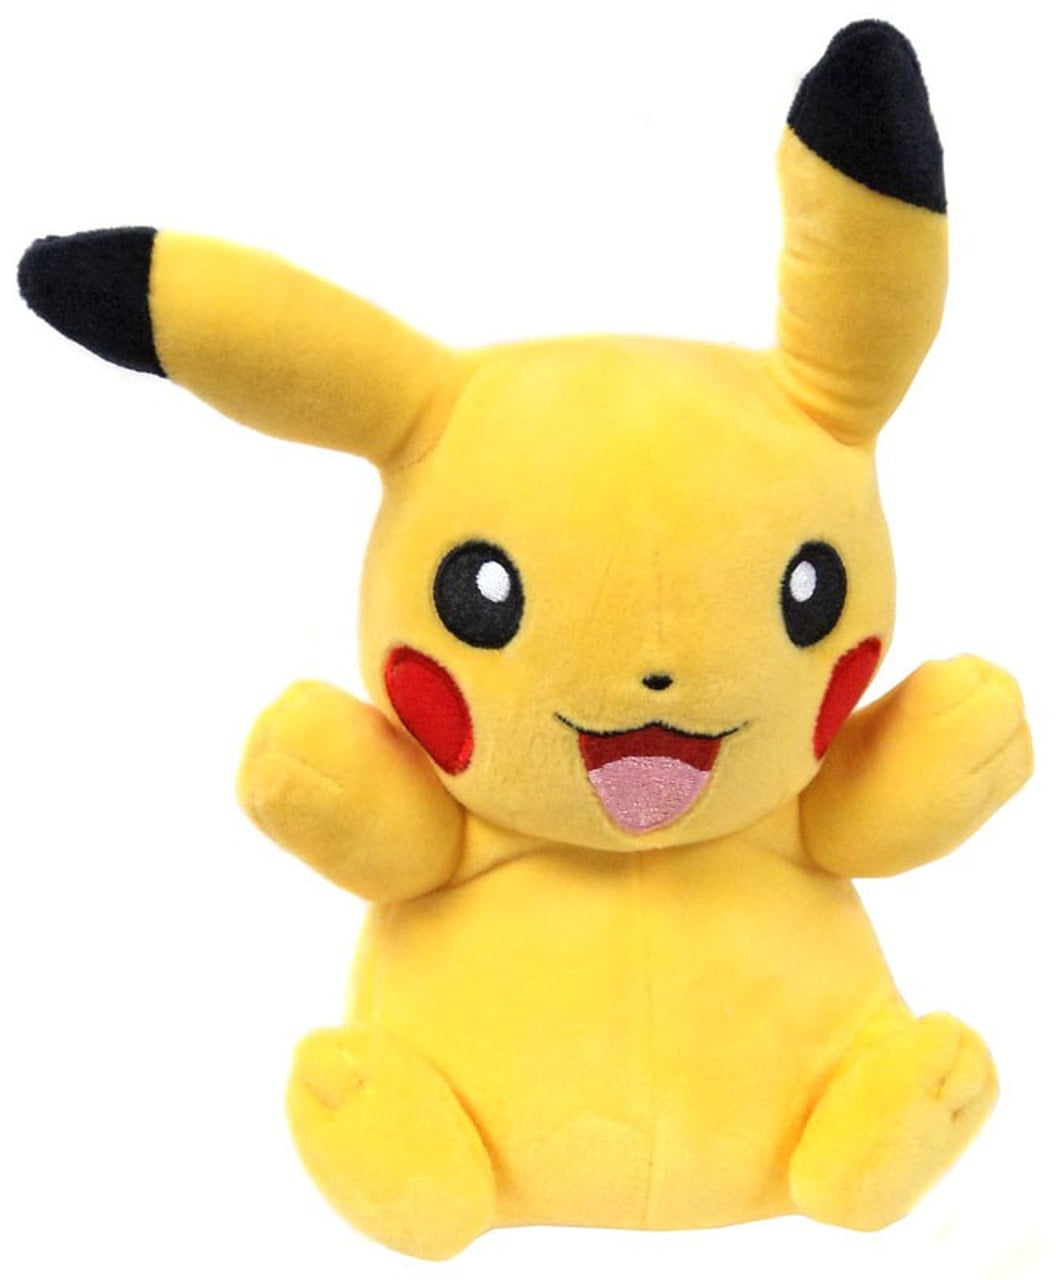 Pikachu Pokémon 8" Plush Official Genuine Product 